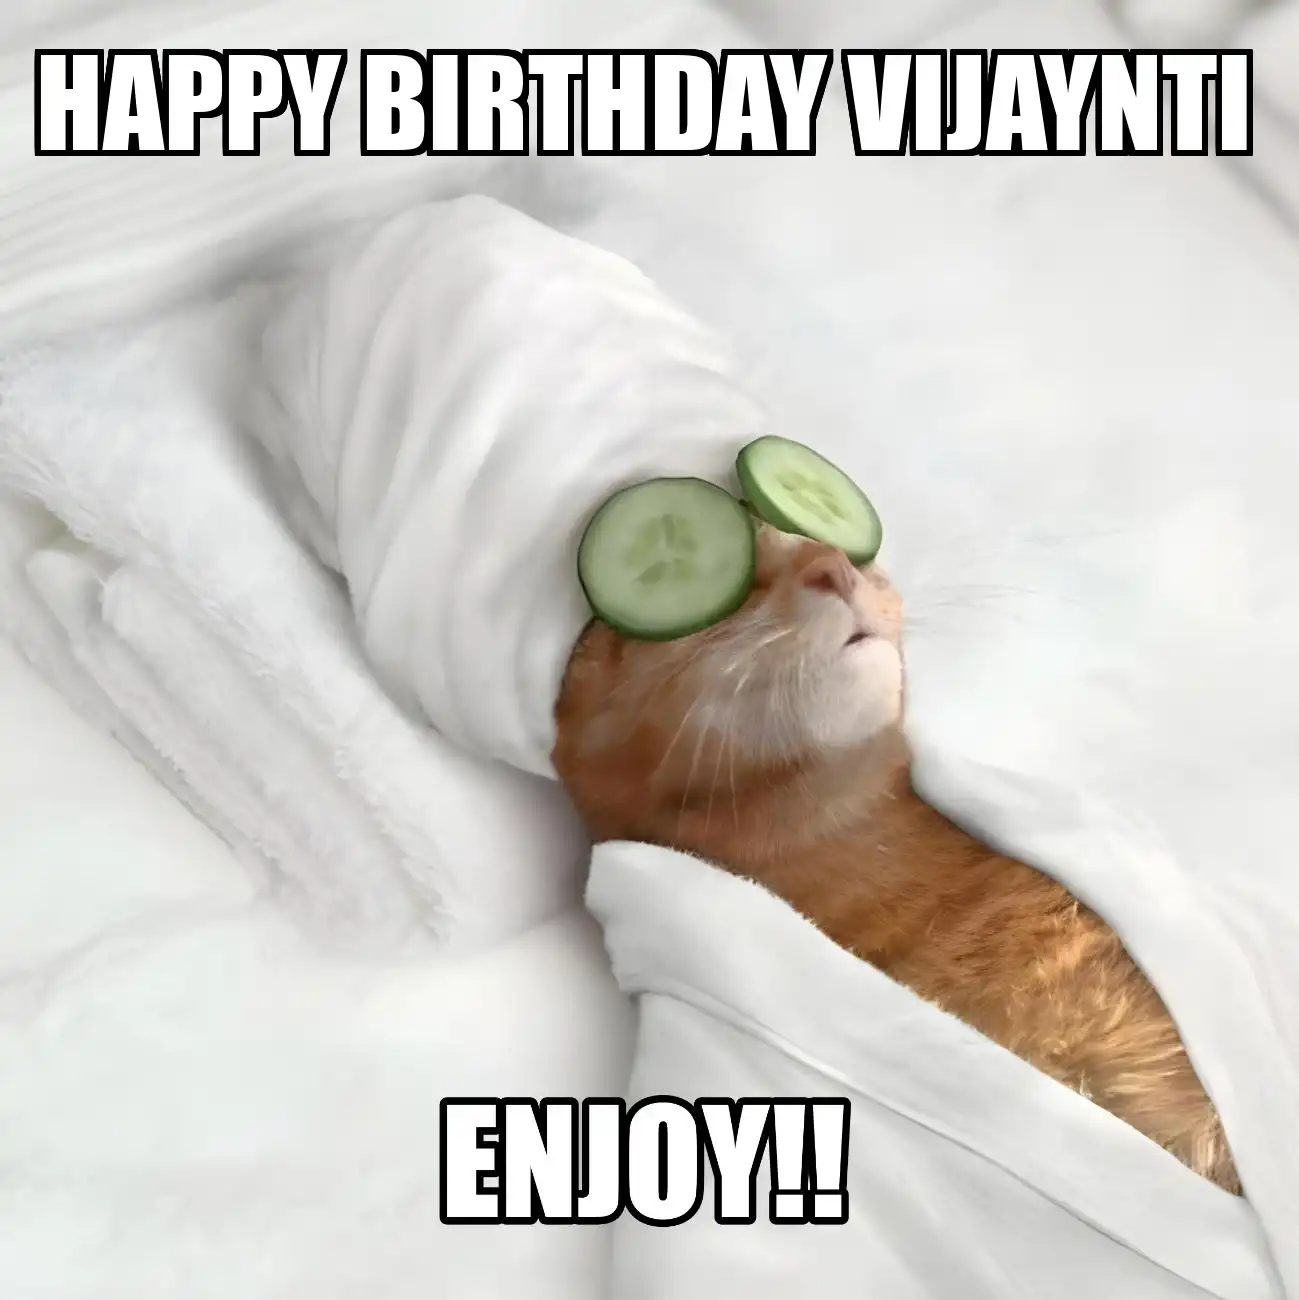 Happy Birthday Vijaynti Enjoy Cat Meme